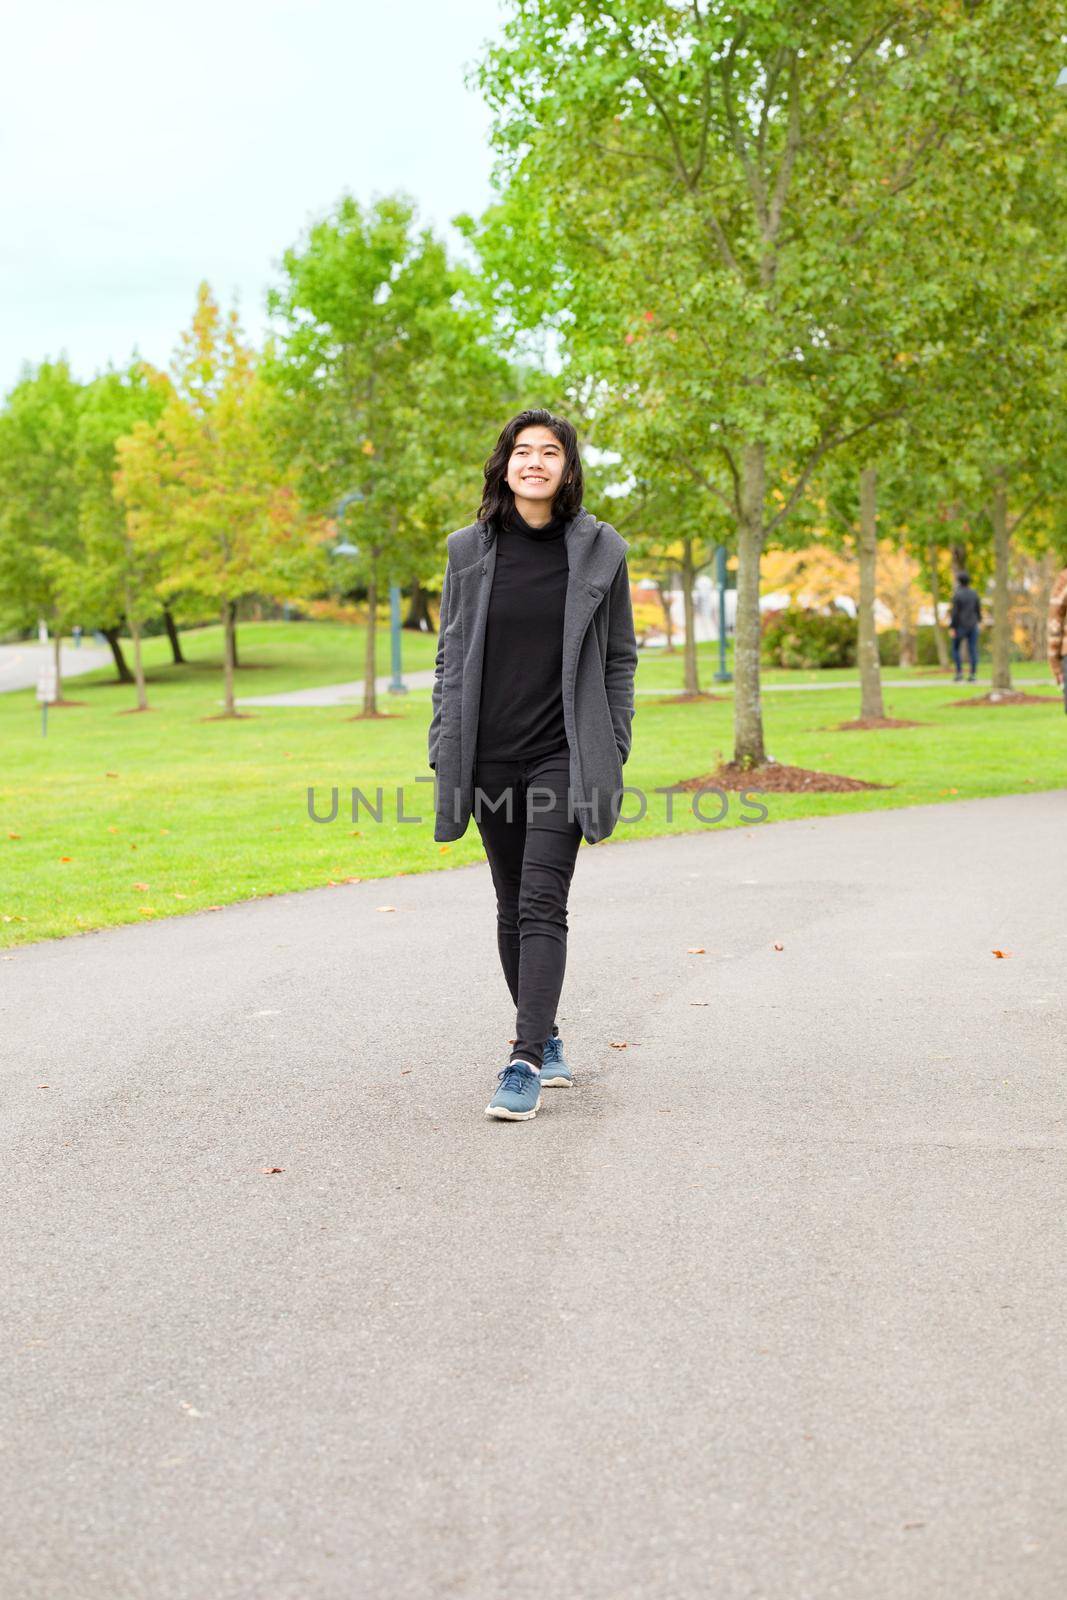 Biracial Asian teen girl enjoying fall autumn leaves along road by jarenwicklund